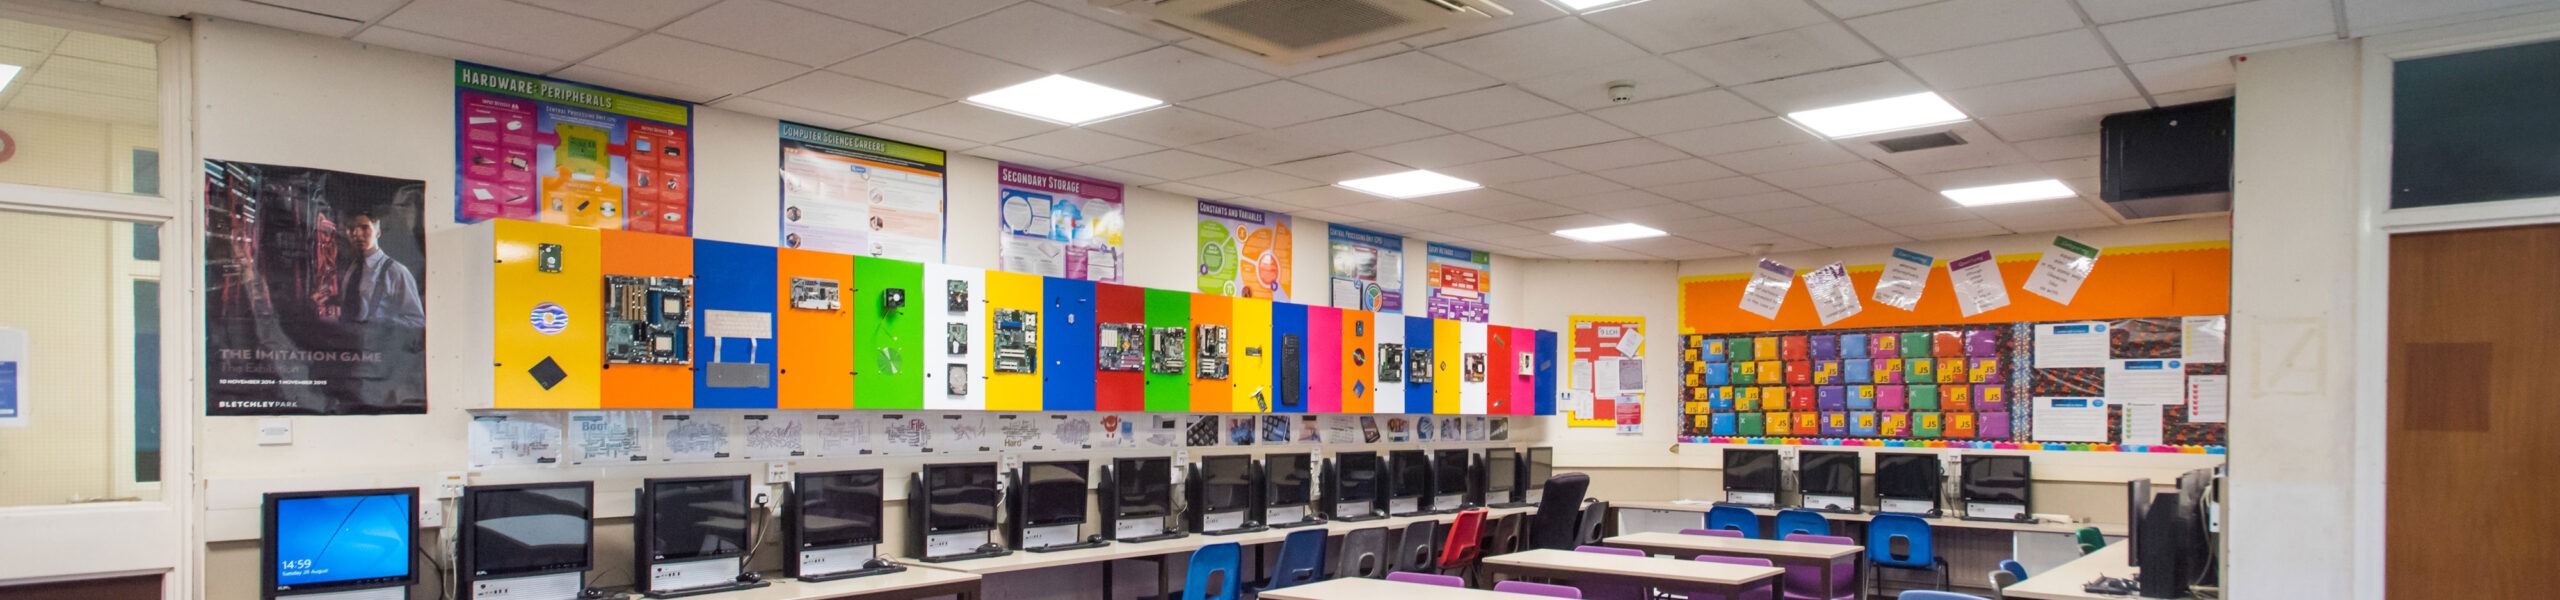 Tamlite The Abbey School Faversham Kent Education LED Lighting Case Study classroom header image